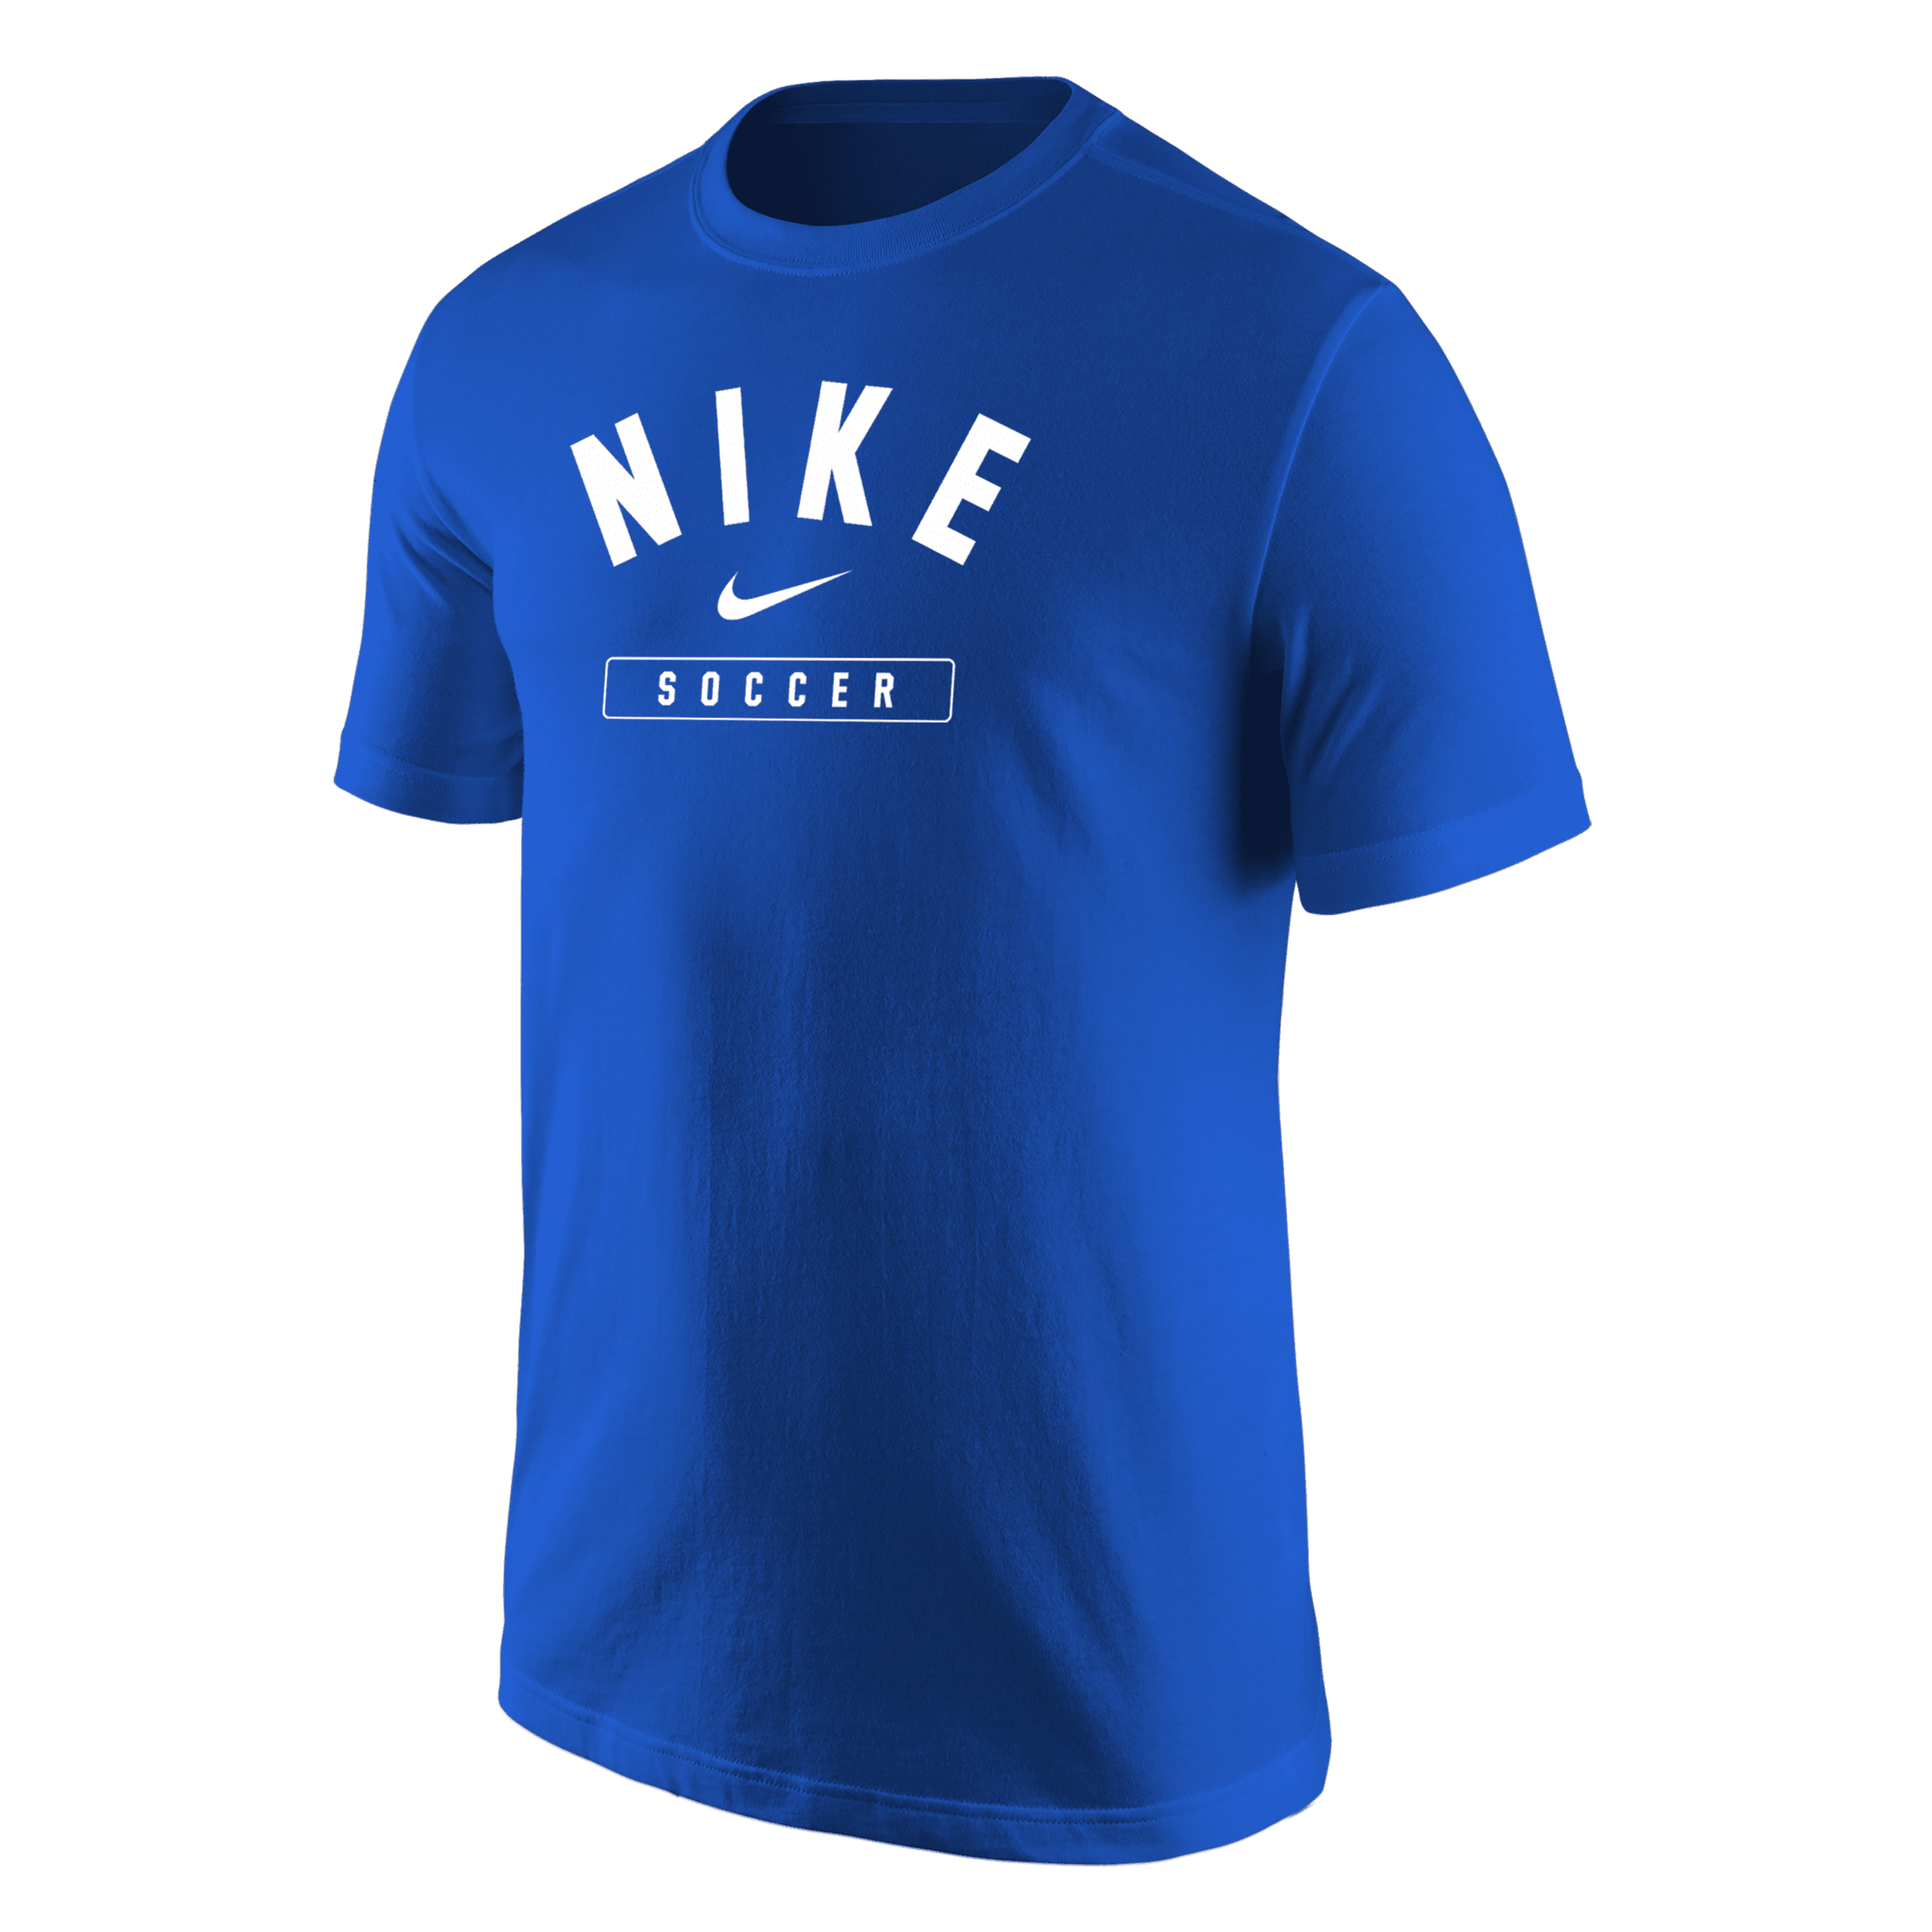 Nike Men's Swoosh Soccer T-shirt In Blue